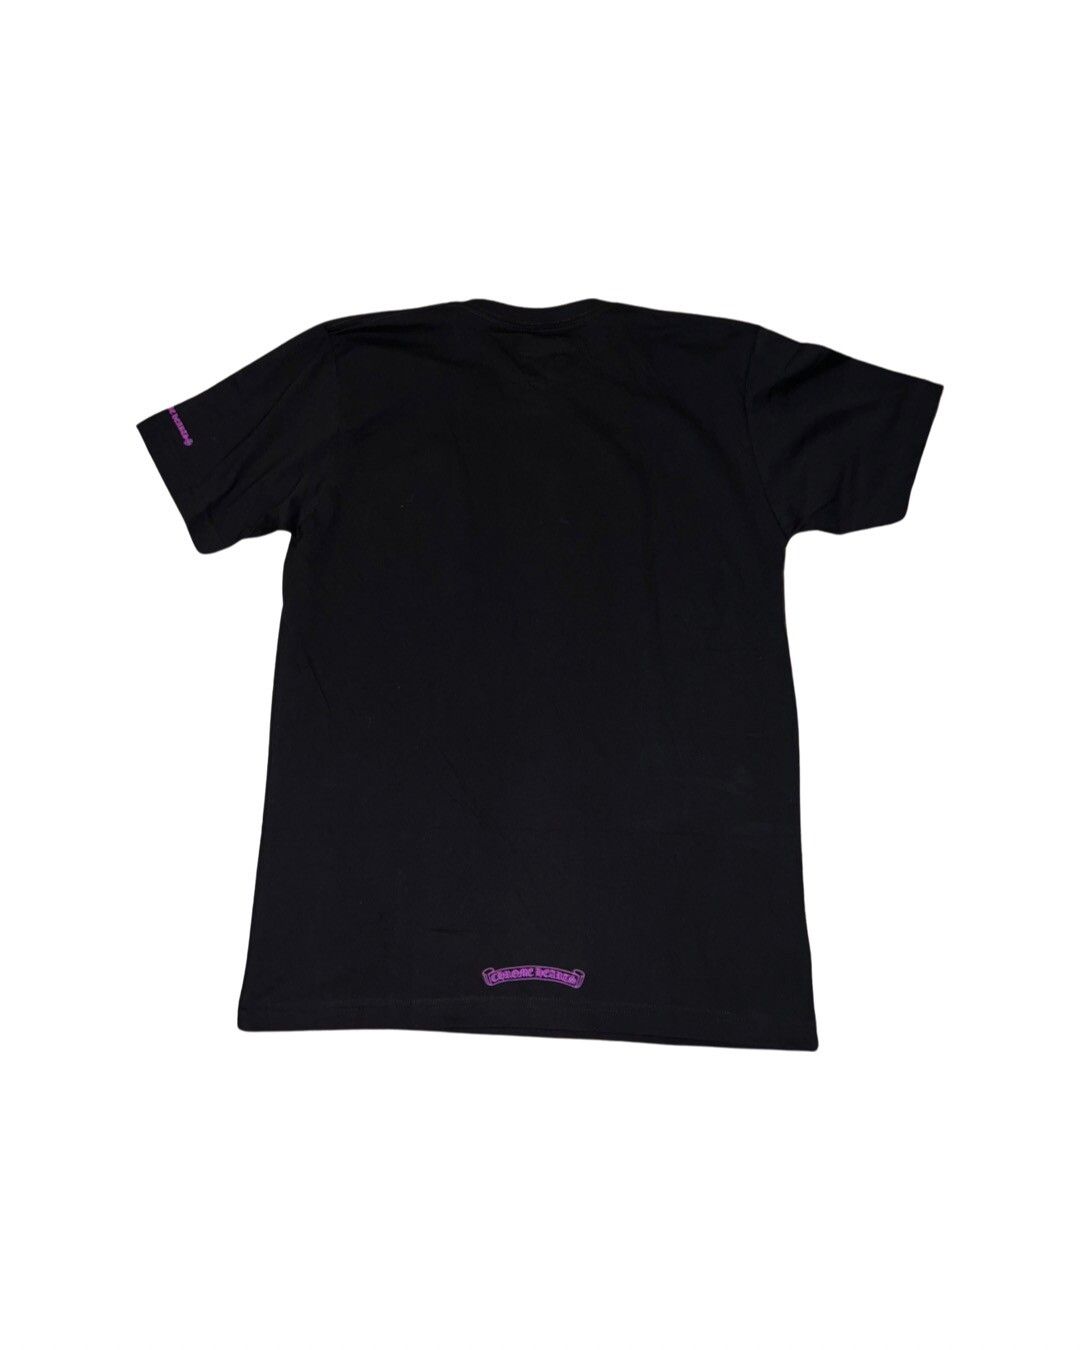 Psych purple neck logo tee - 2